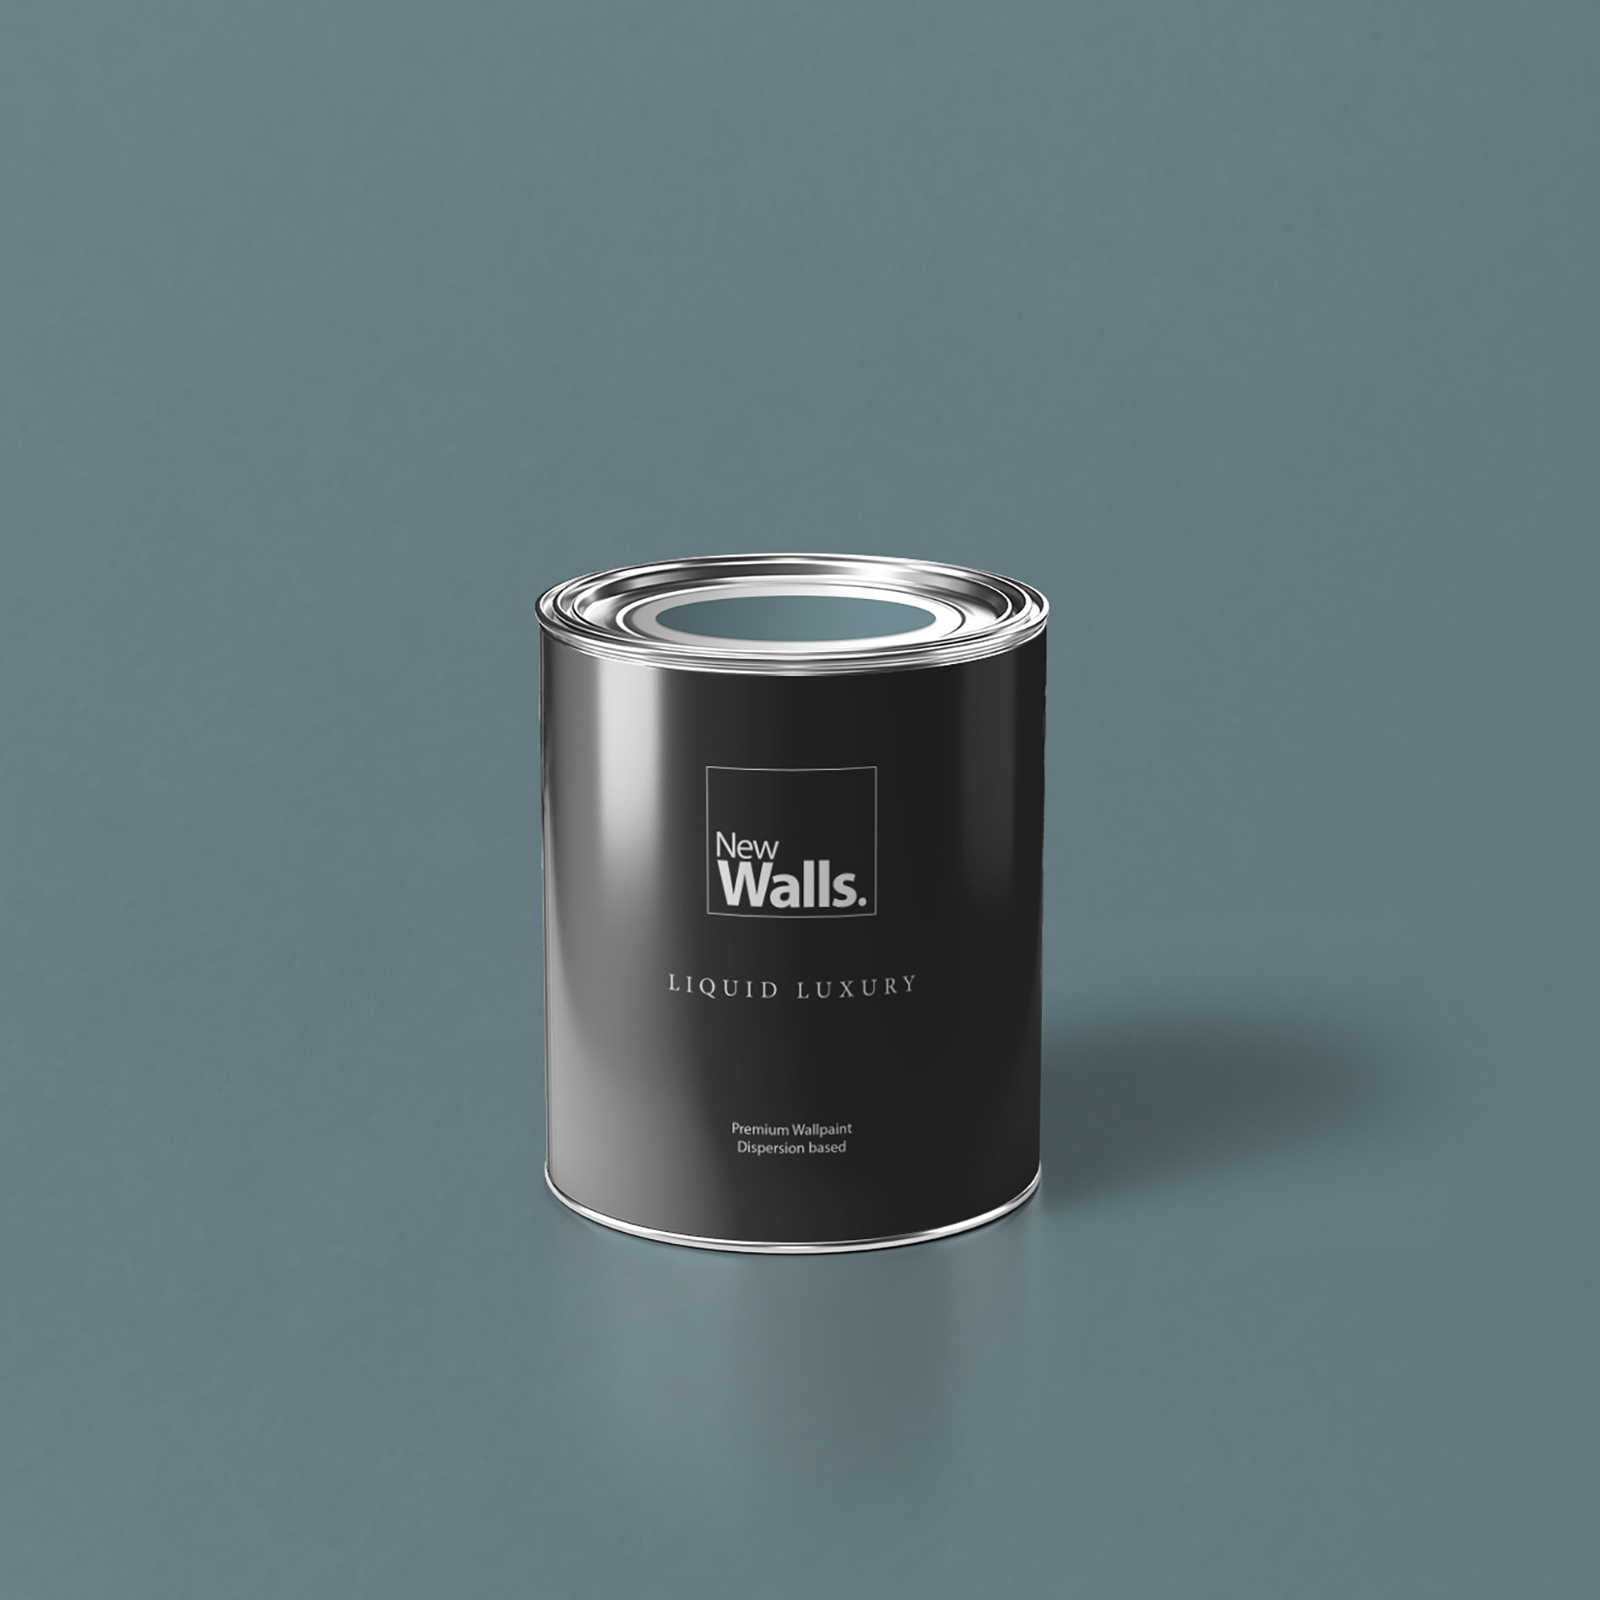         Premium Wandfarbe entspannendes Taubenblau »Balanced Blue« NW311 – 1 Liter
    